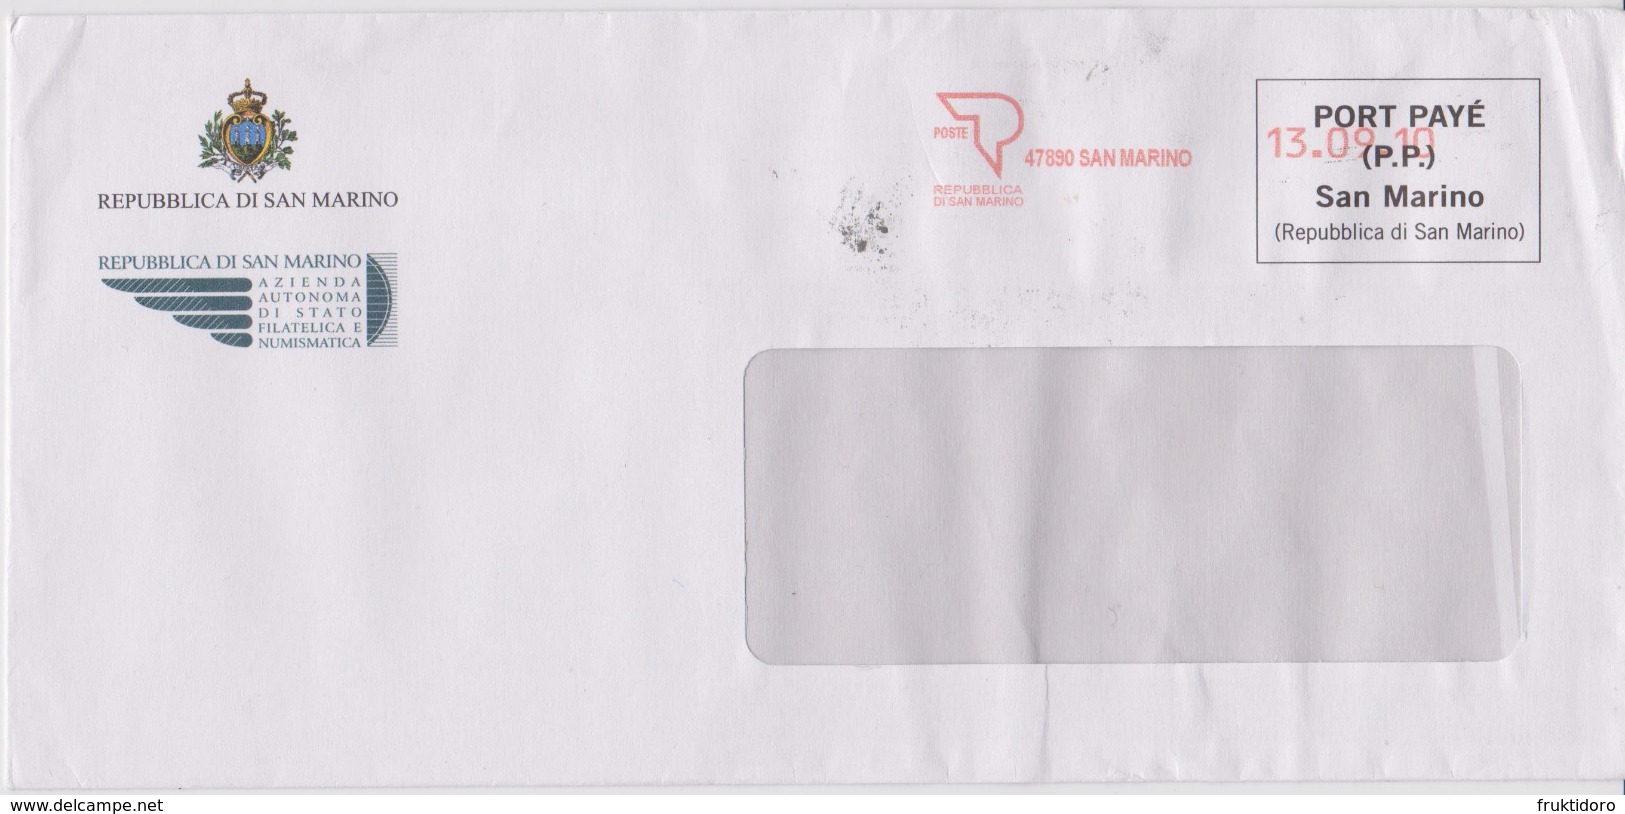 San Marino Three Envelopes Port Payé - Errors, Freaks & Oddities (EFO)